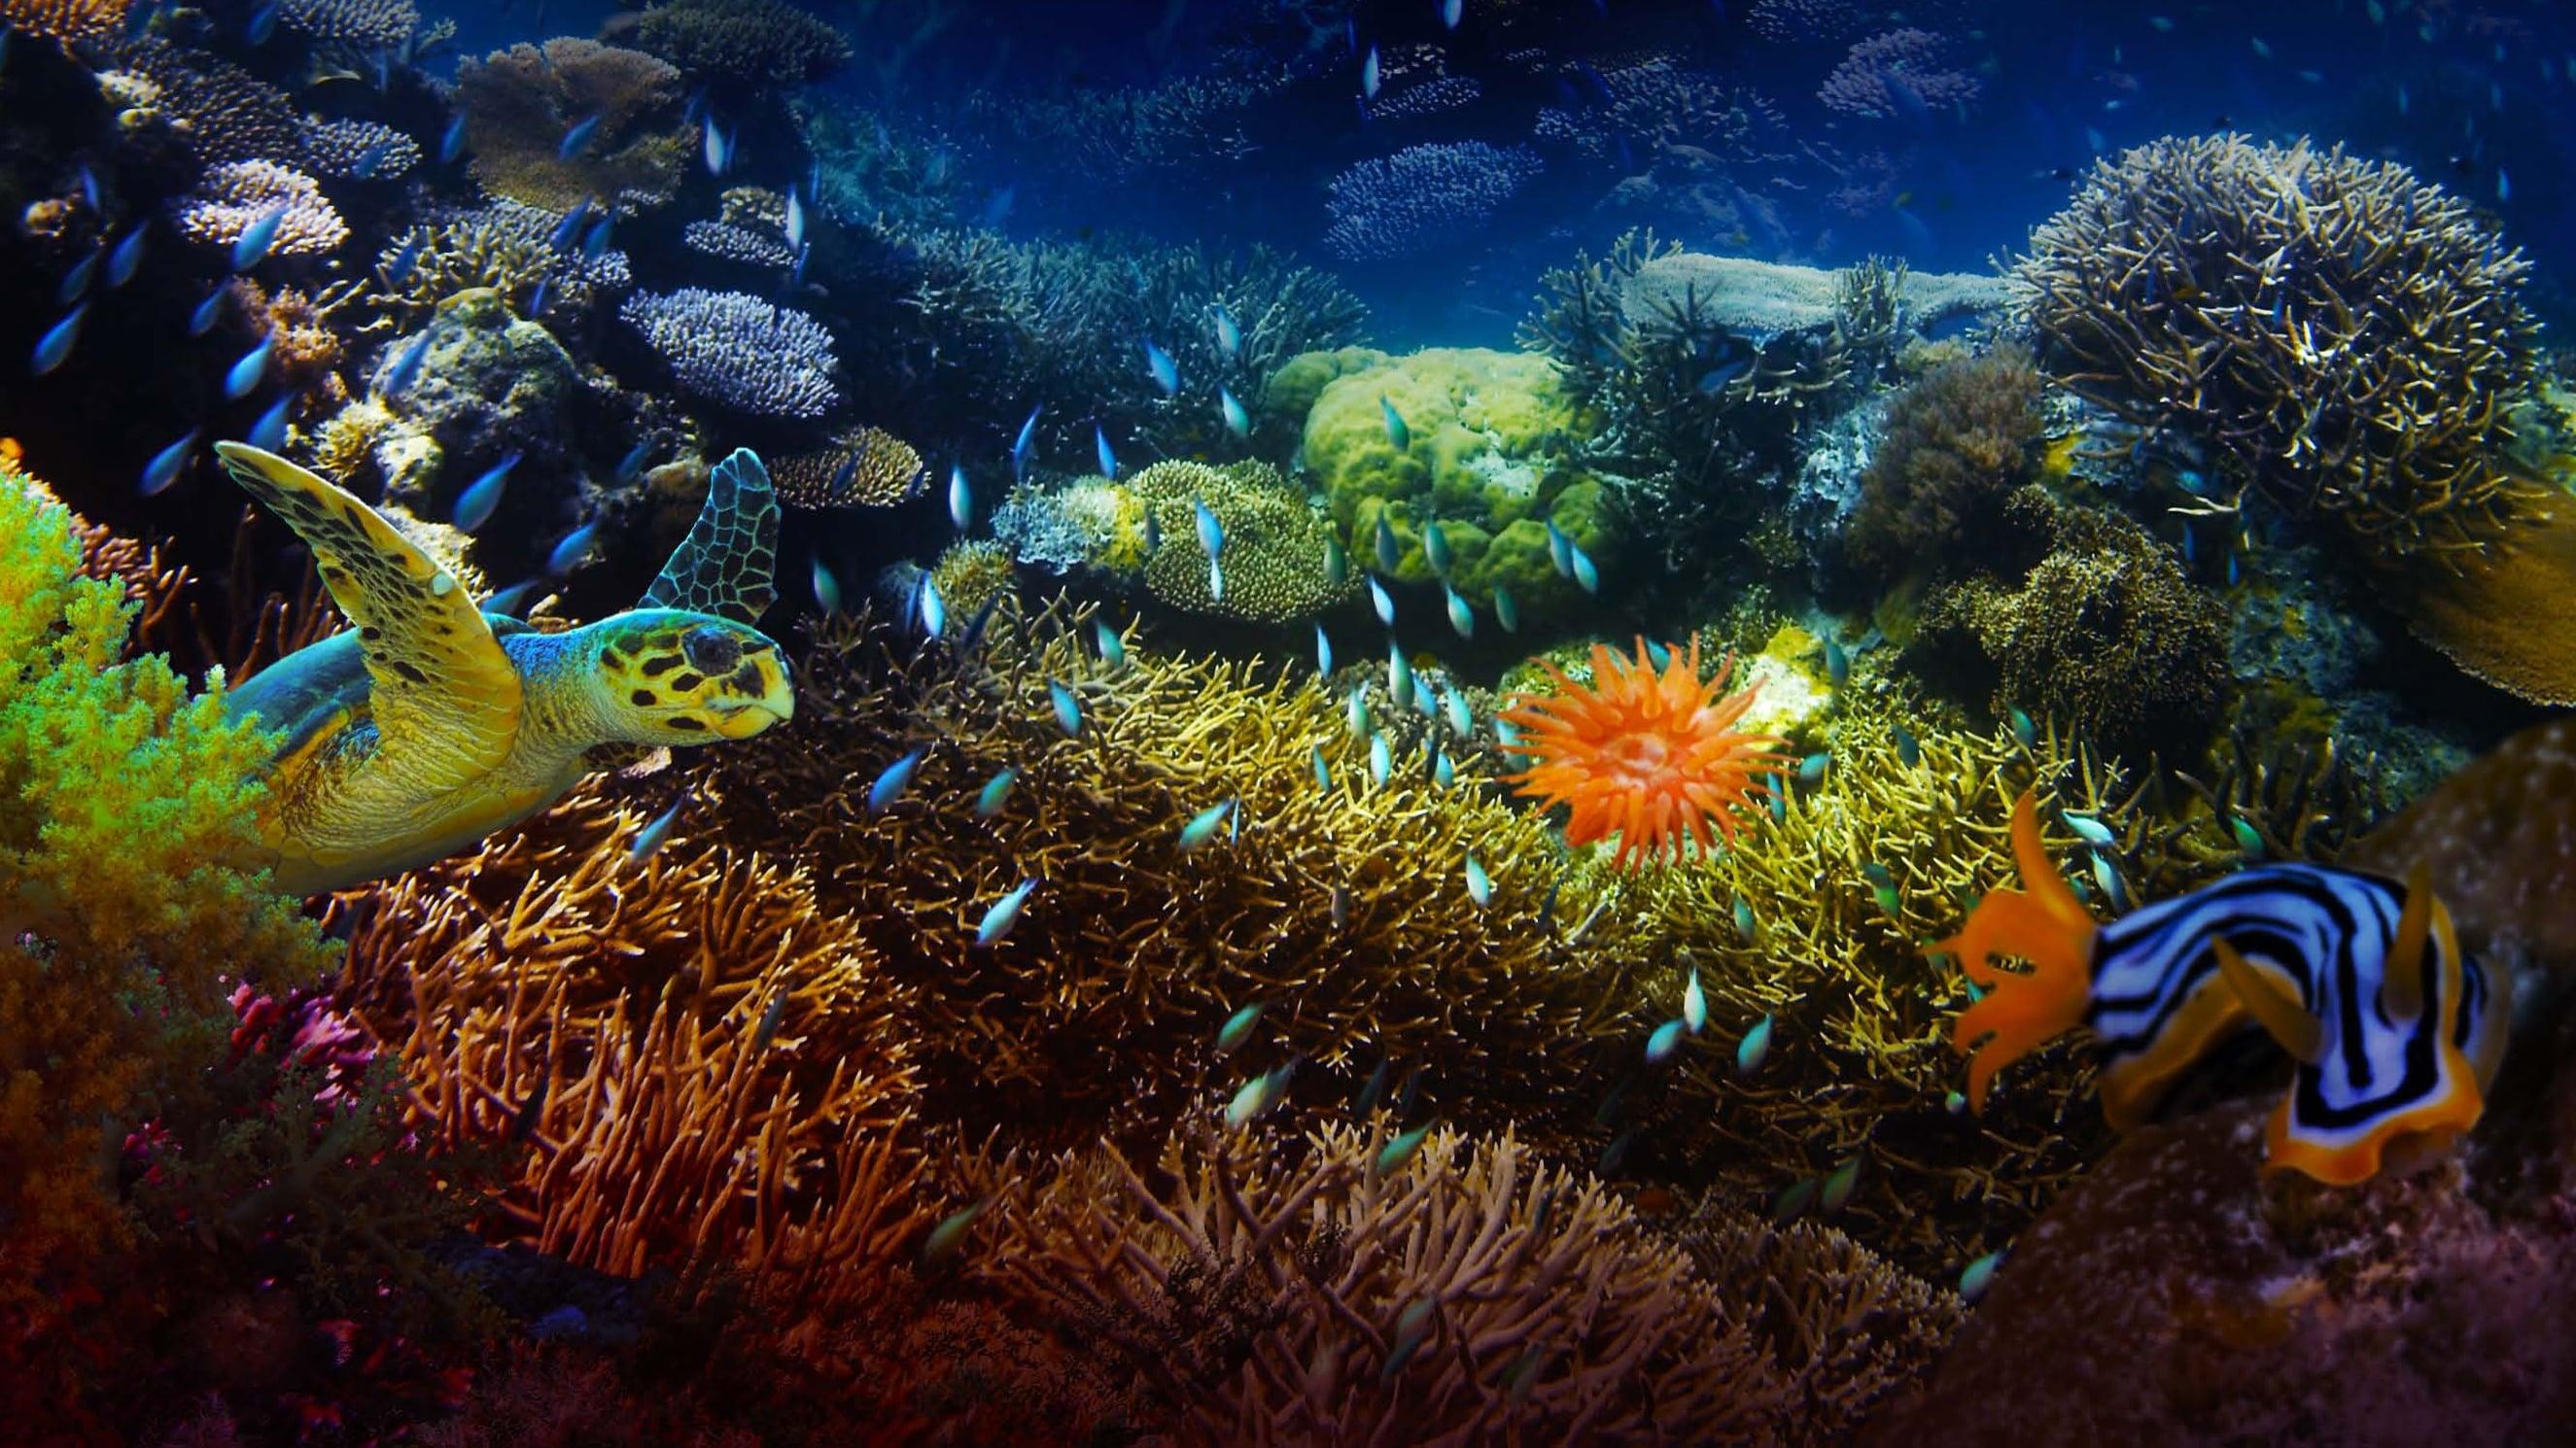 The Last Reef: Cities Beneath the Sea backdrop